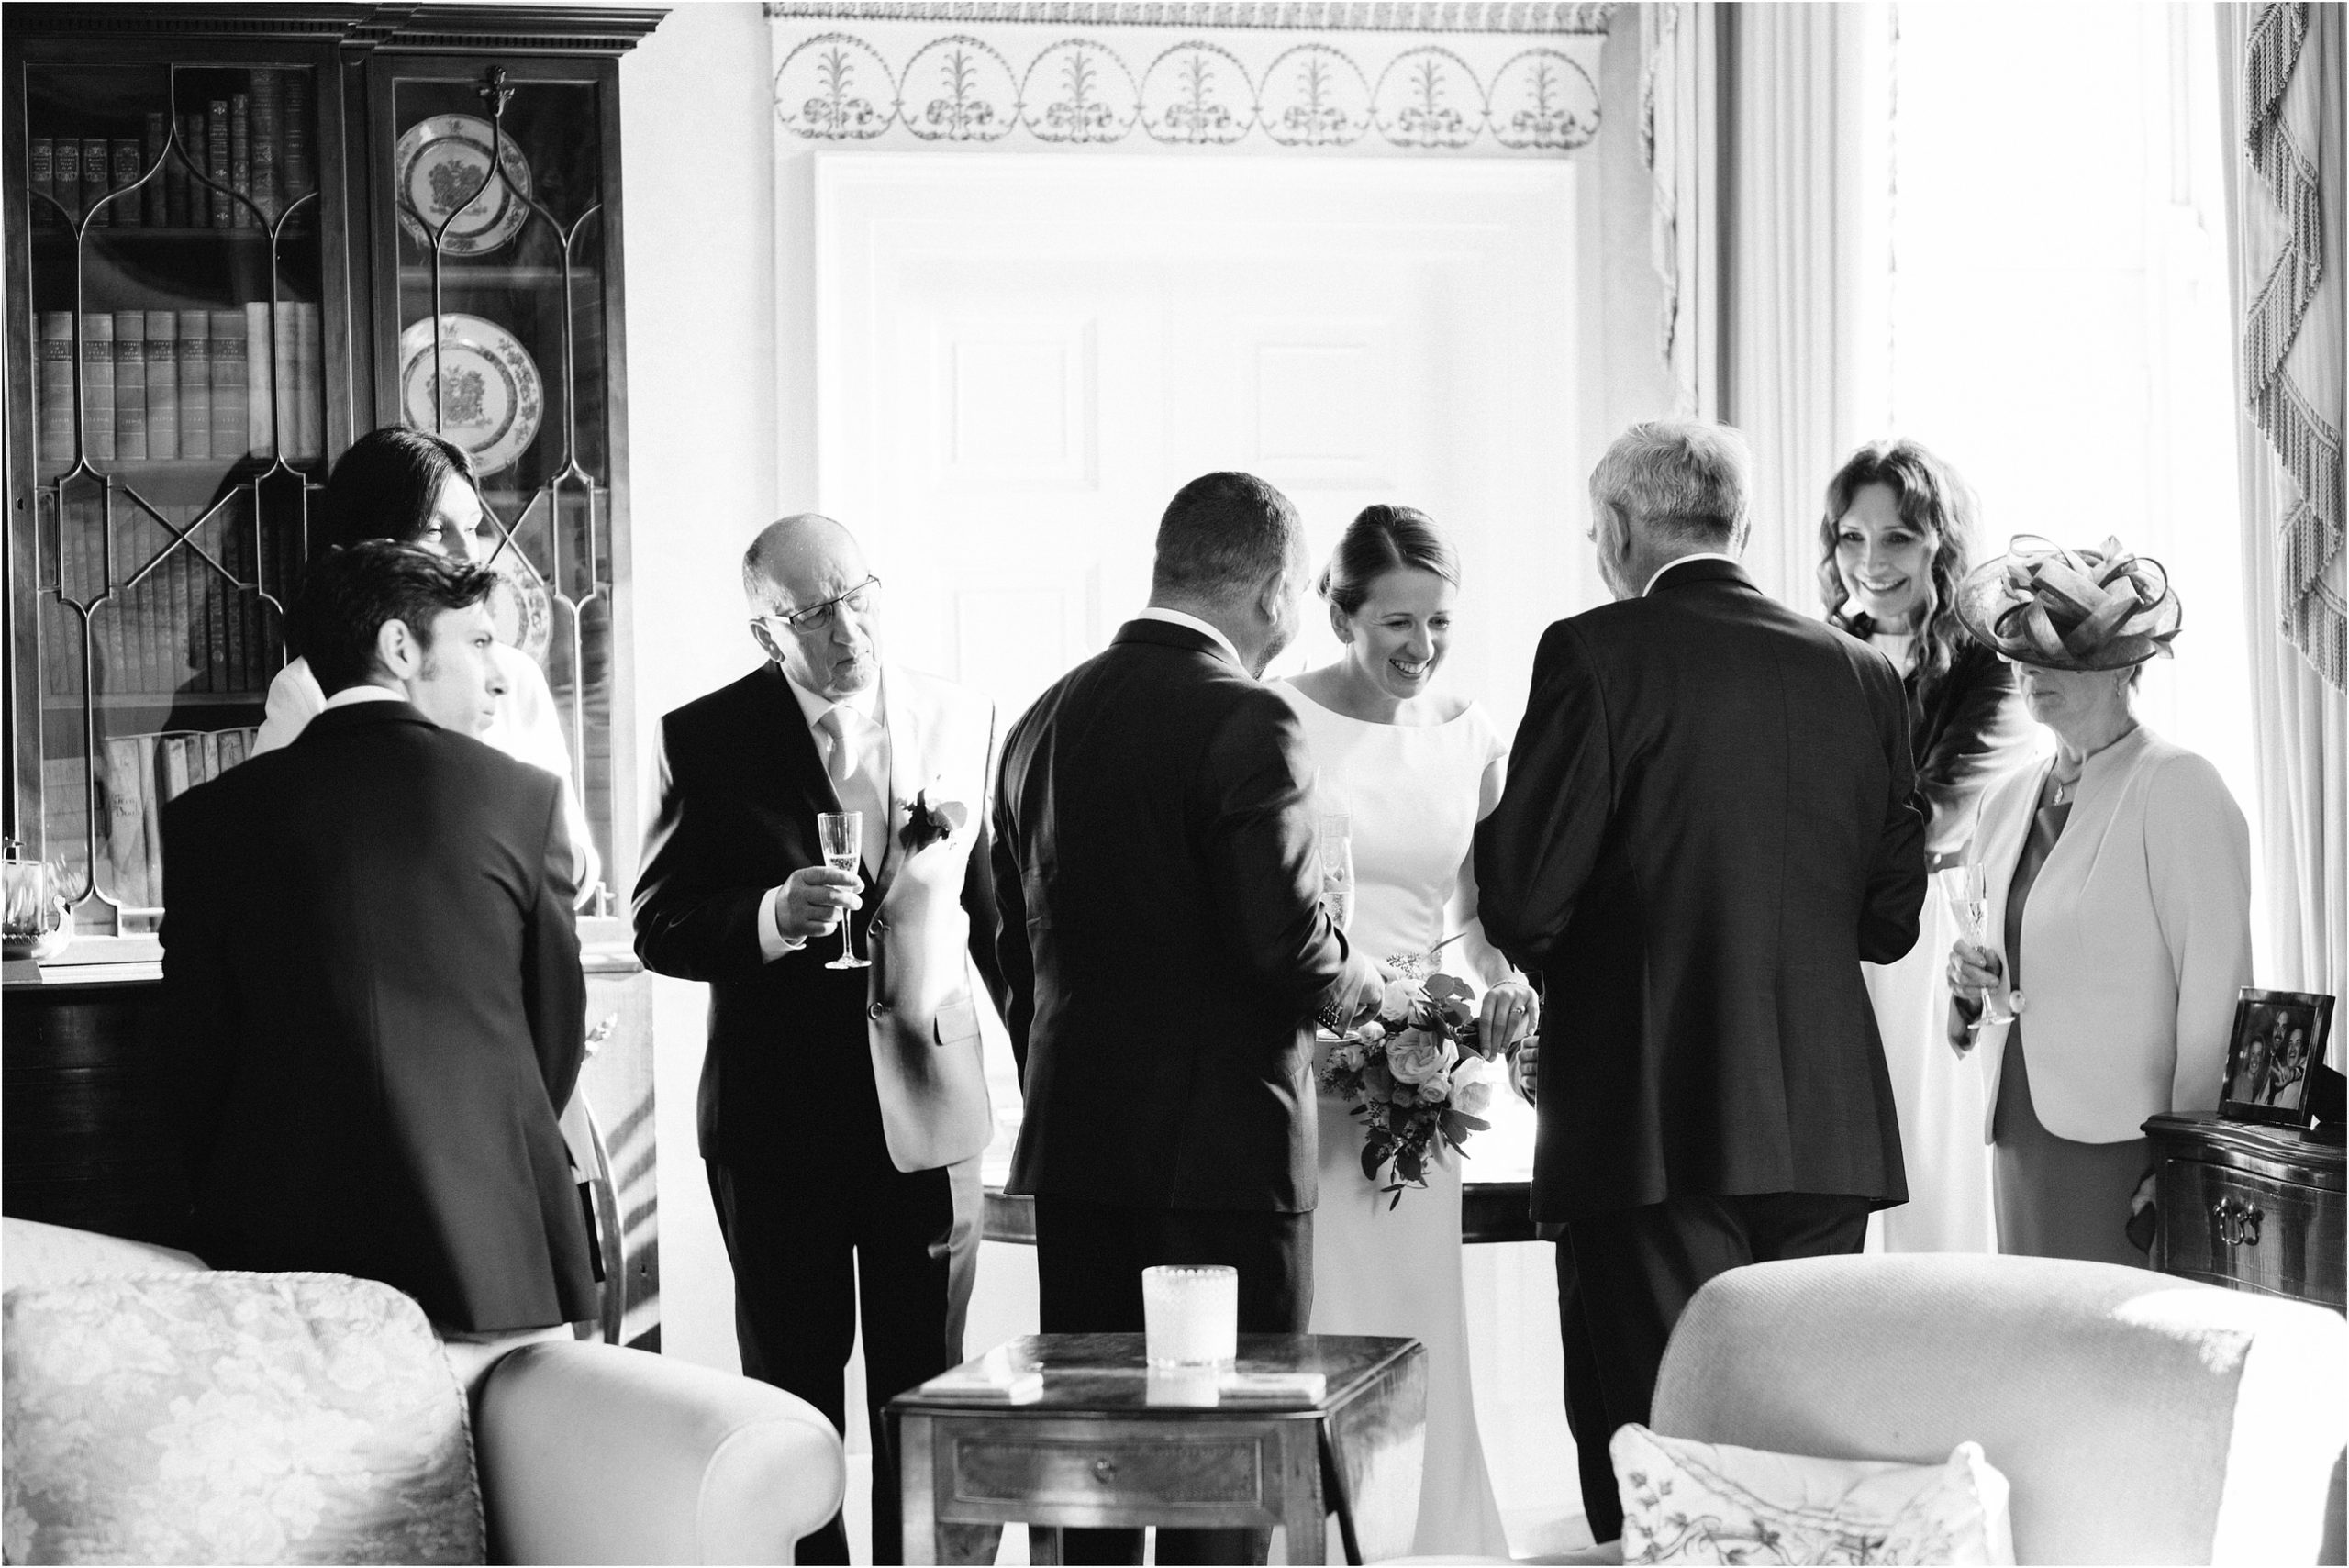 Guests at wedding reception at Ugbrooke House